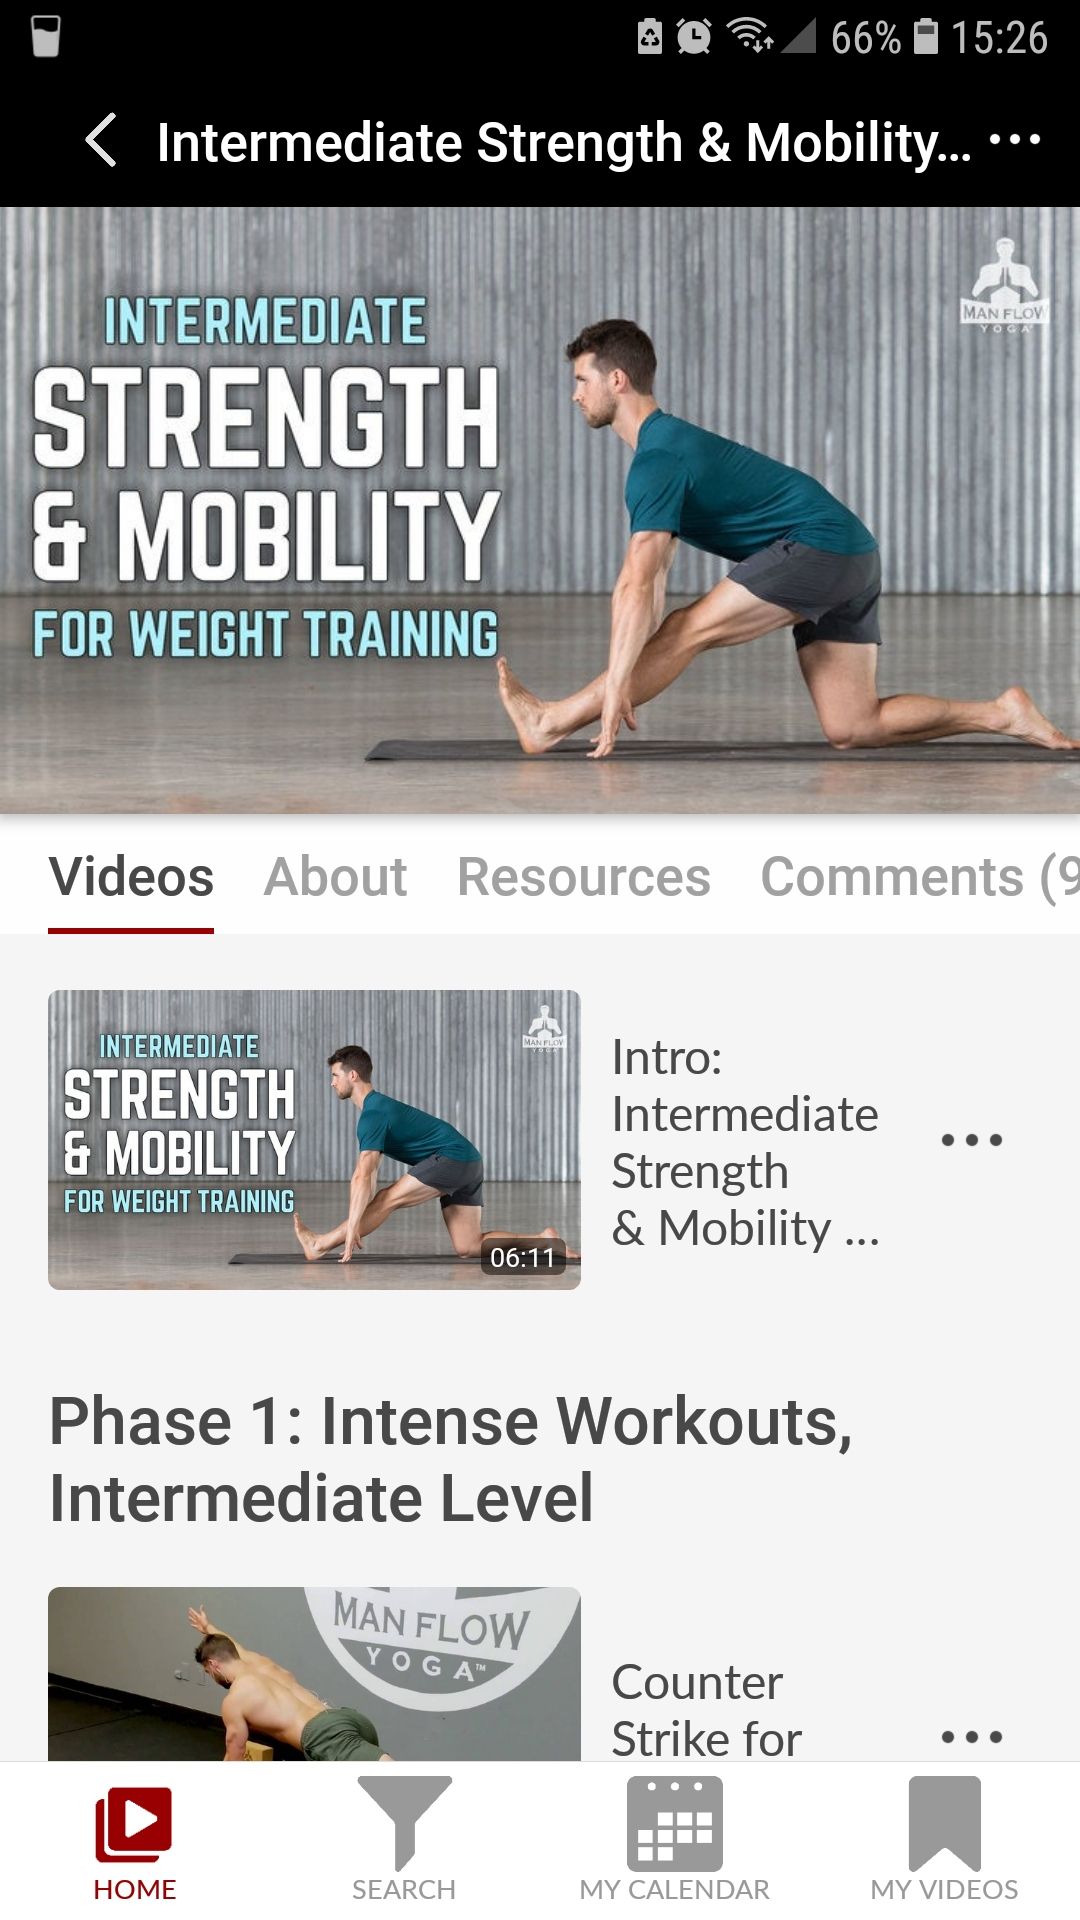 Man Flow Yoga mobile app intermediate strength mobility